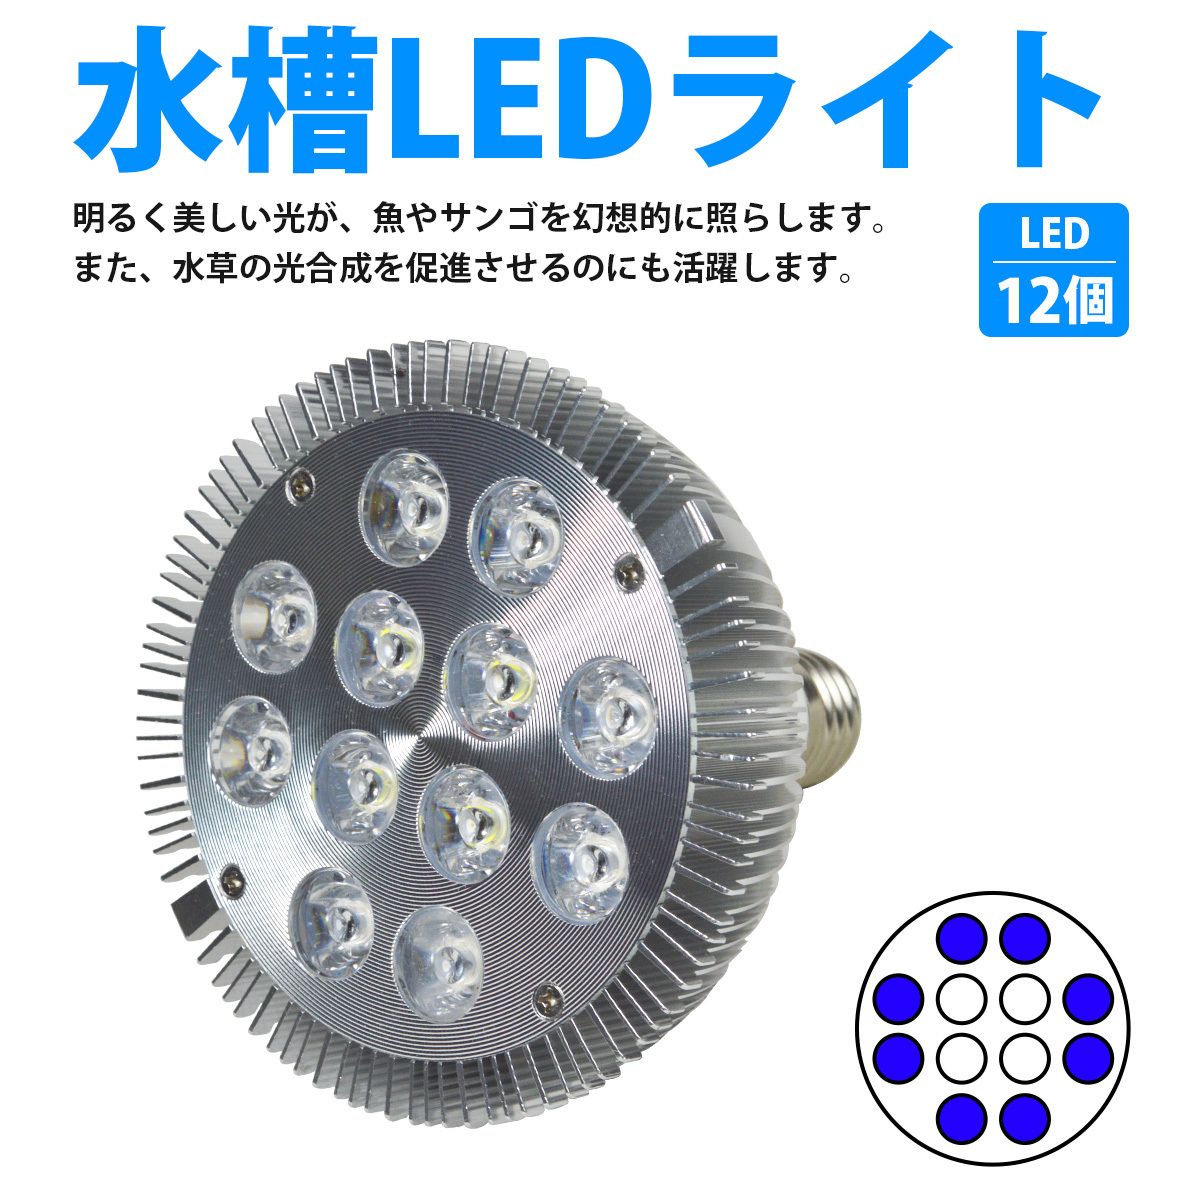 LED 電球 スポットライト 24W 2W×12 青8白4灯 水槽 照明 電気 水草 熱帯魚 定番 観賞魚 サンゴ LEDスポットライト E26  植物育成